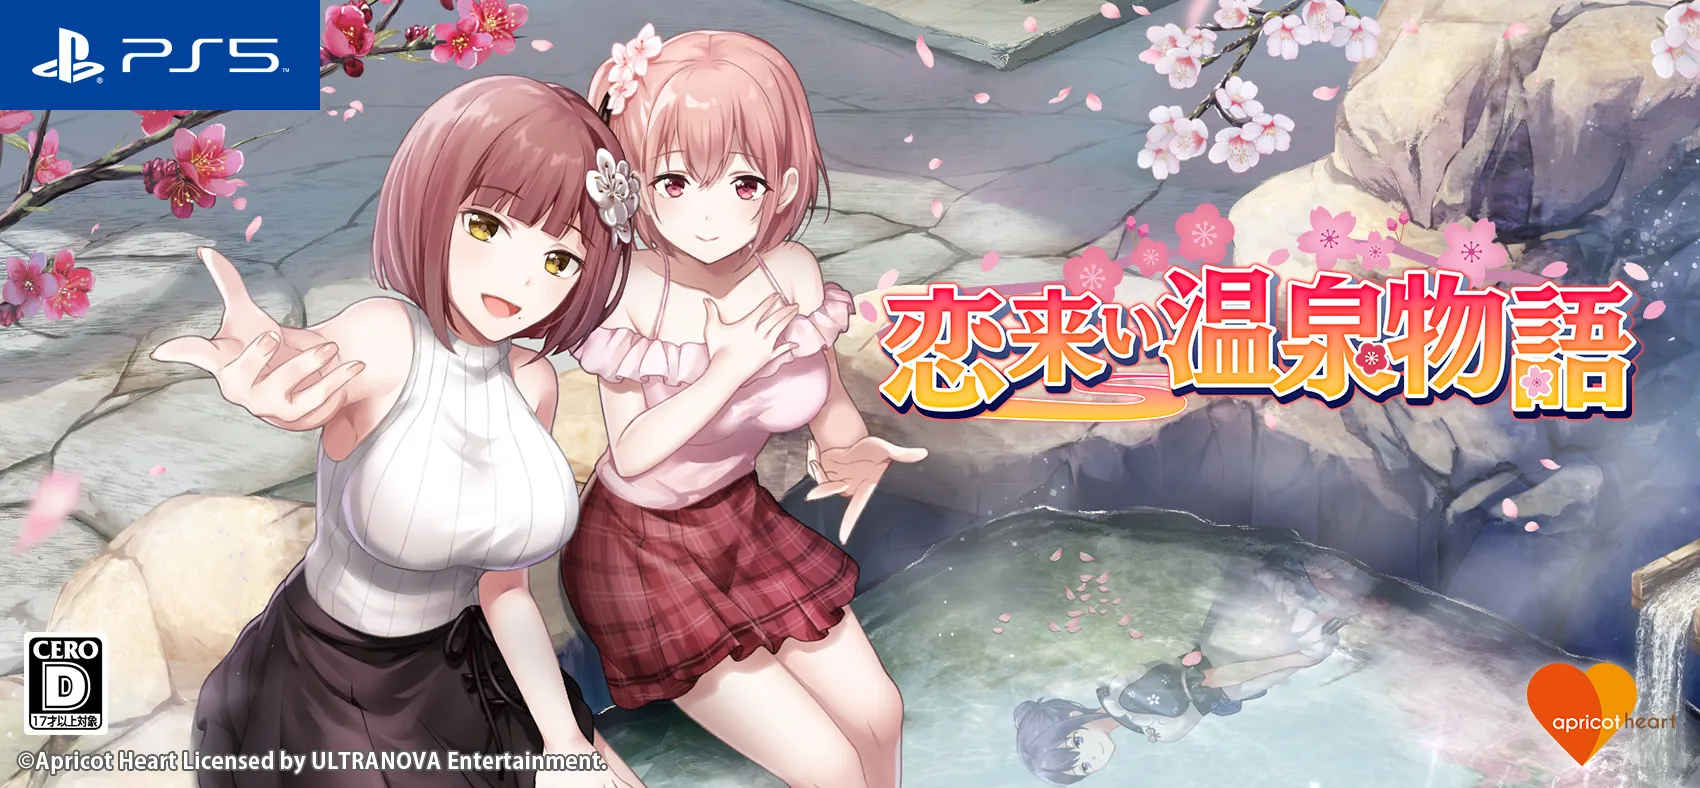 Playstation®5 恋愛アドベンチャーゲーム『恋来い温泉物語』公式サイト開設のお知らせ